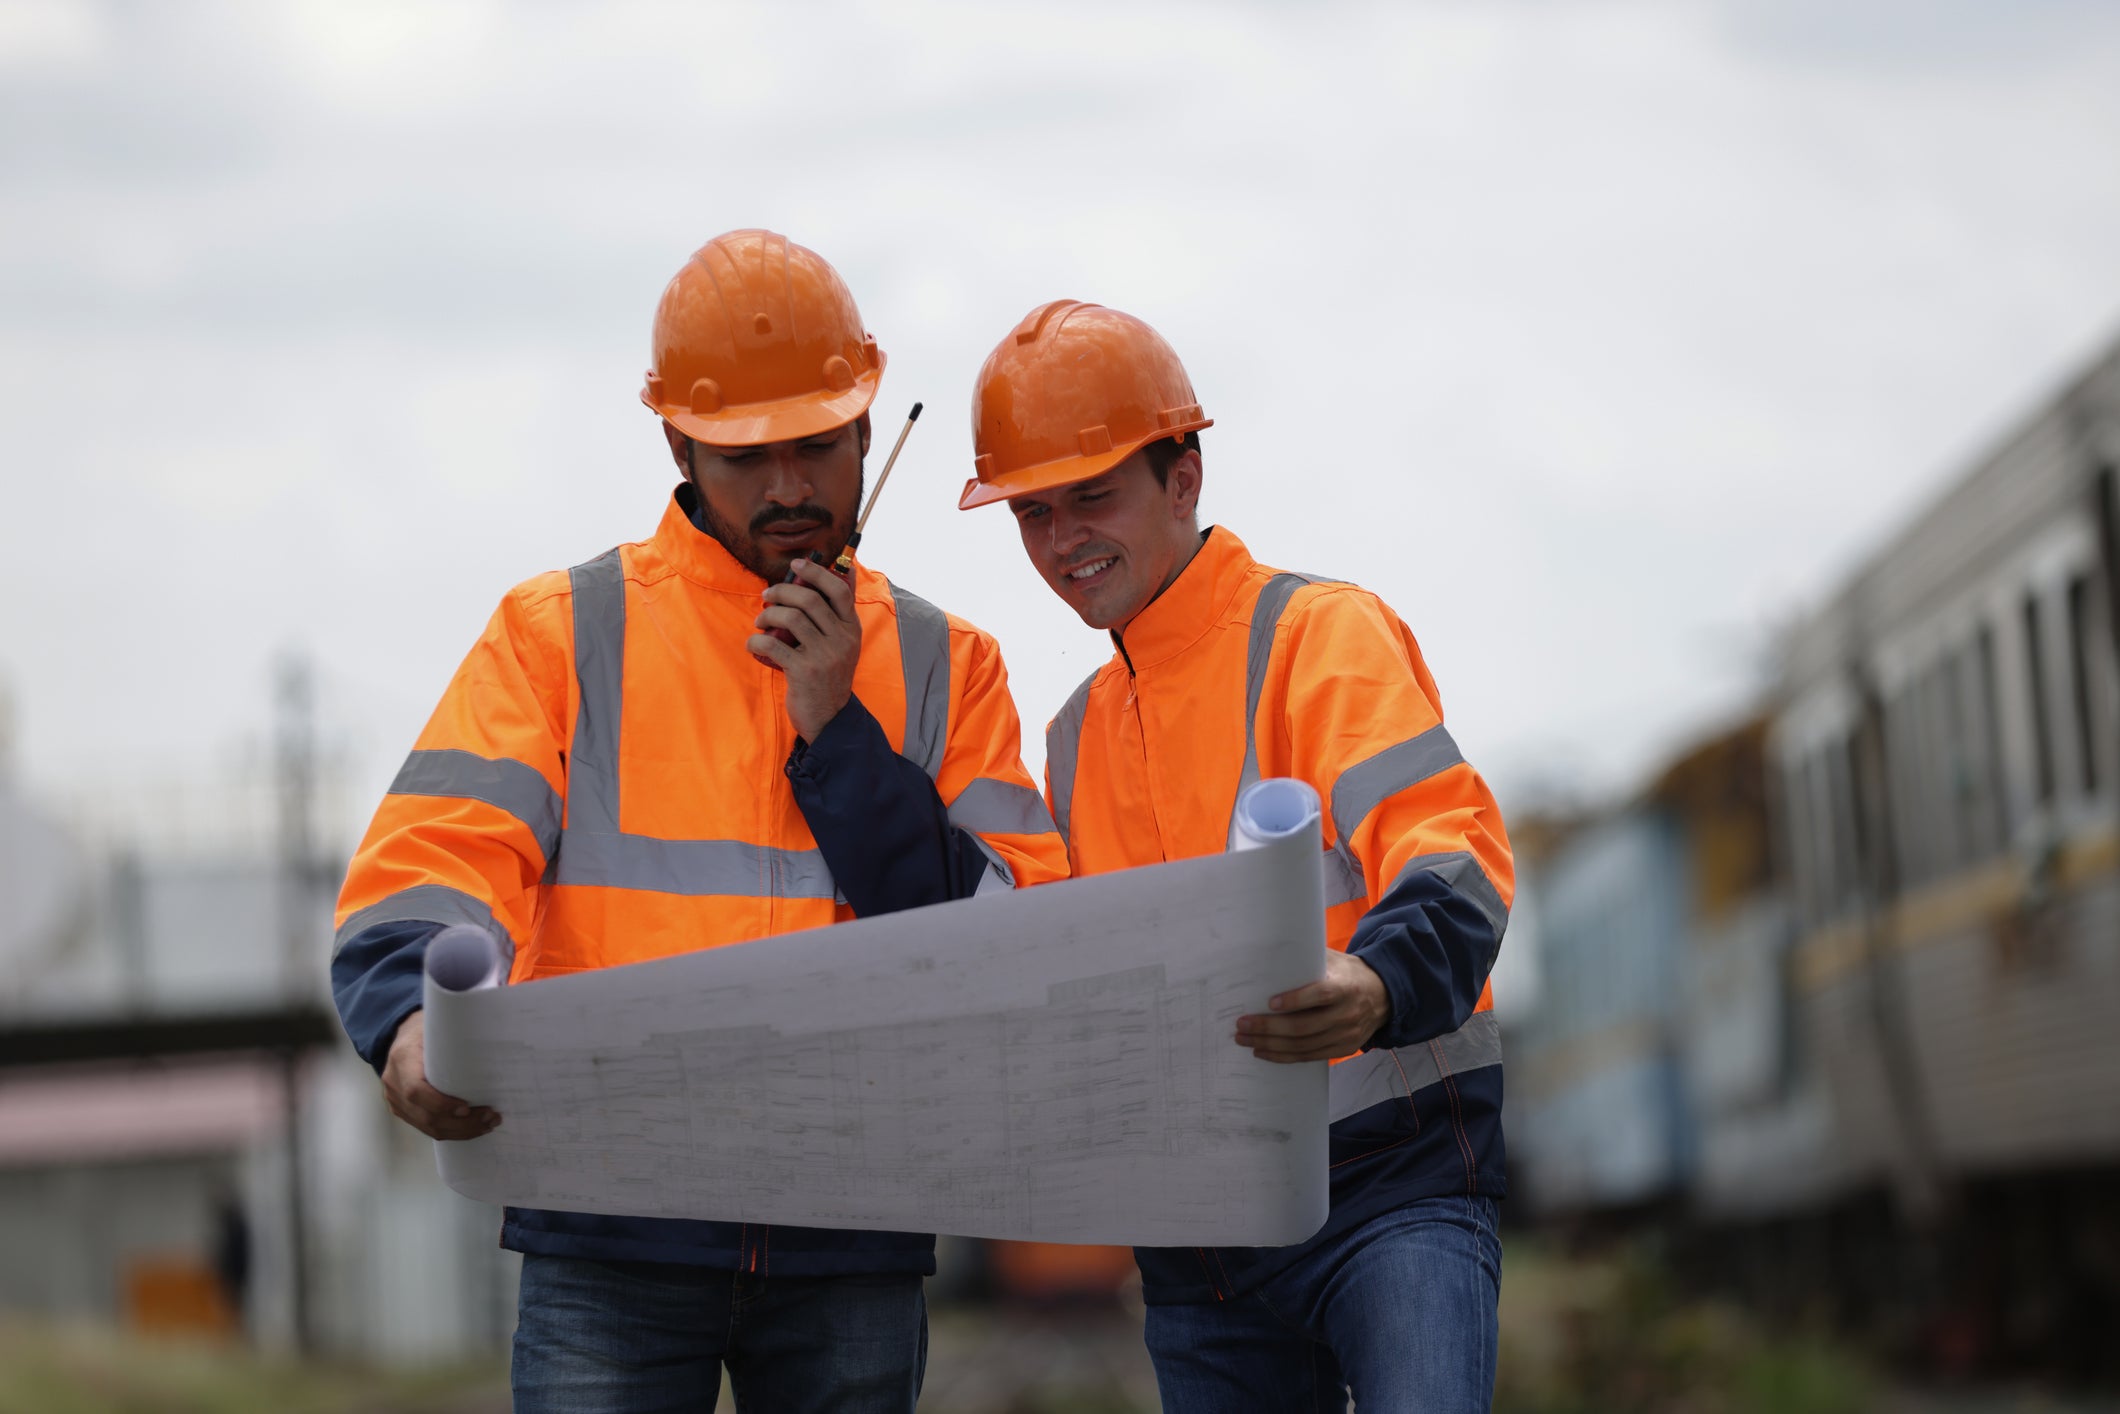 OSHA Regular for High Visibility Apparel on Construction Zone